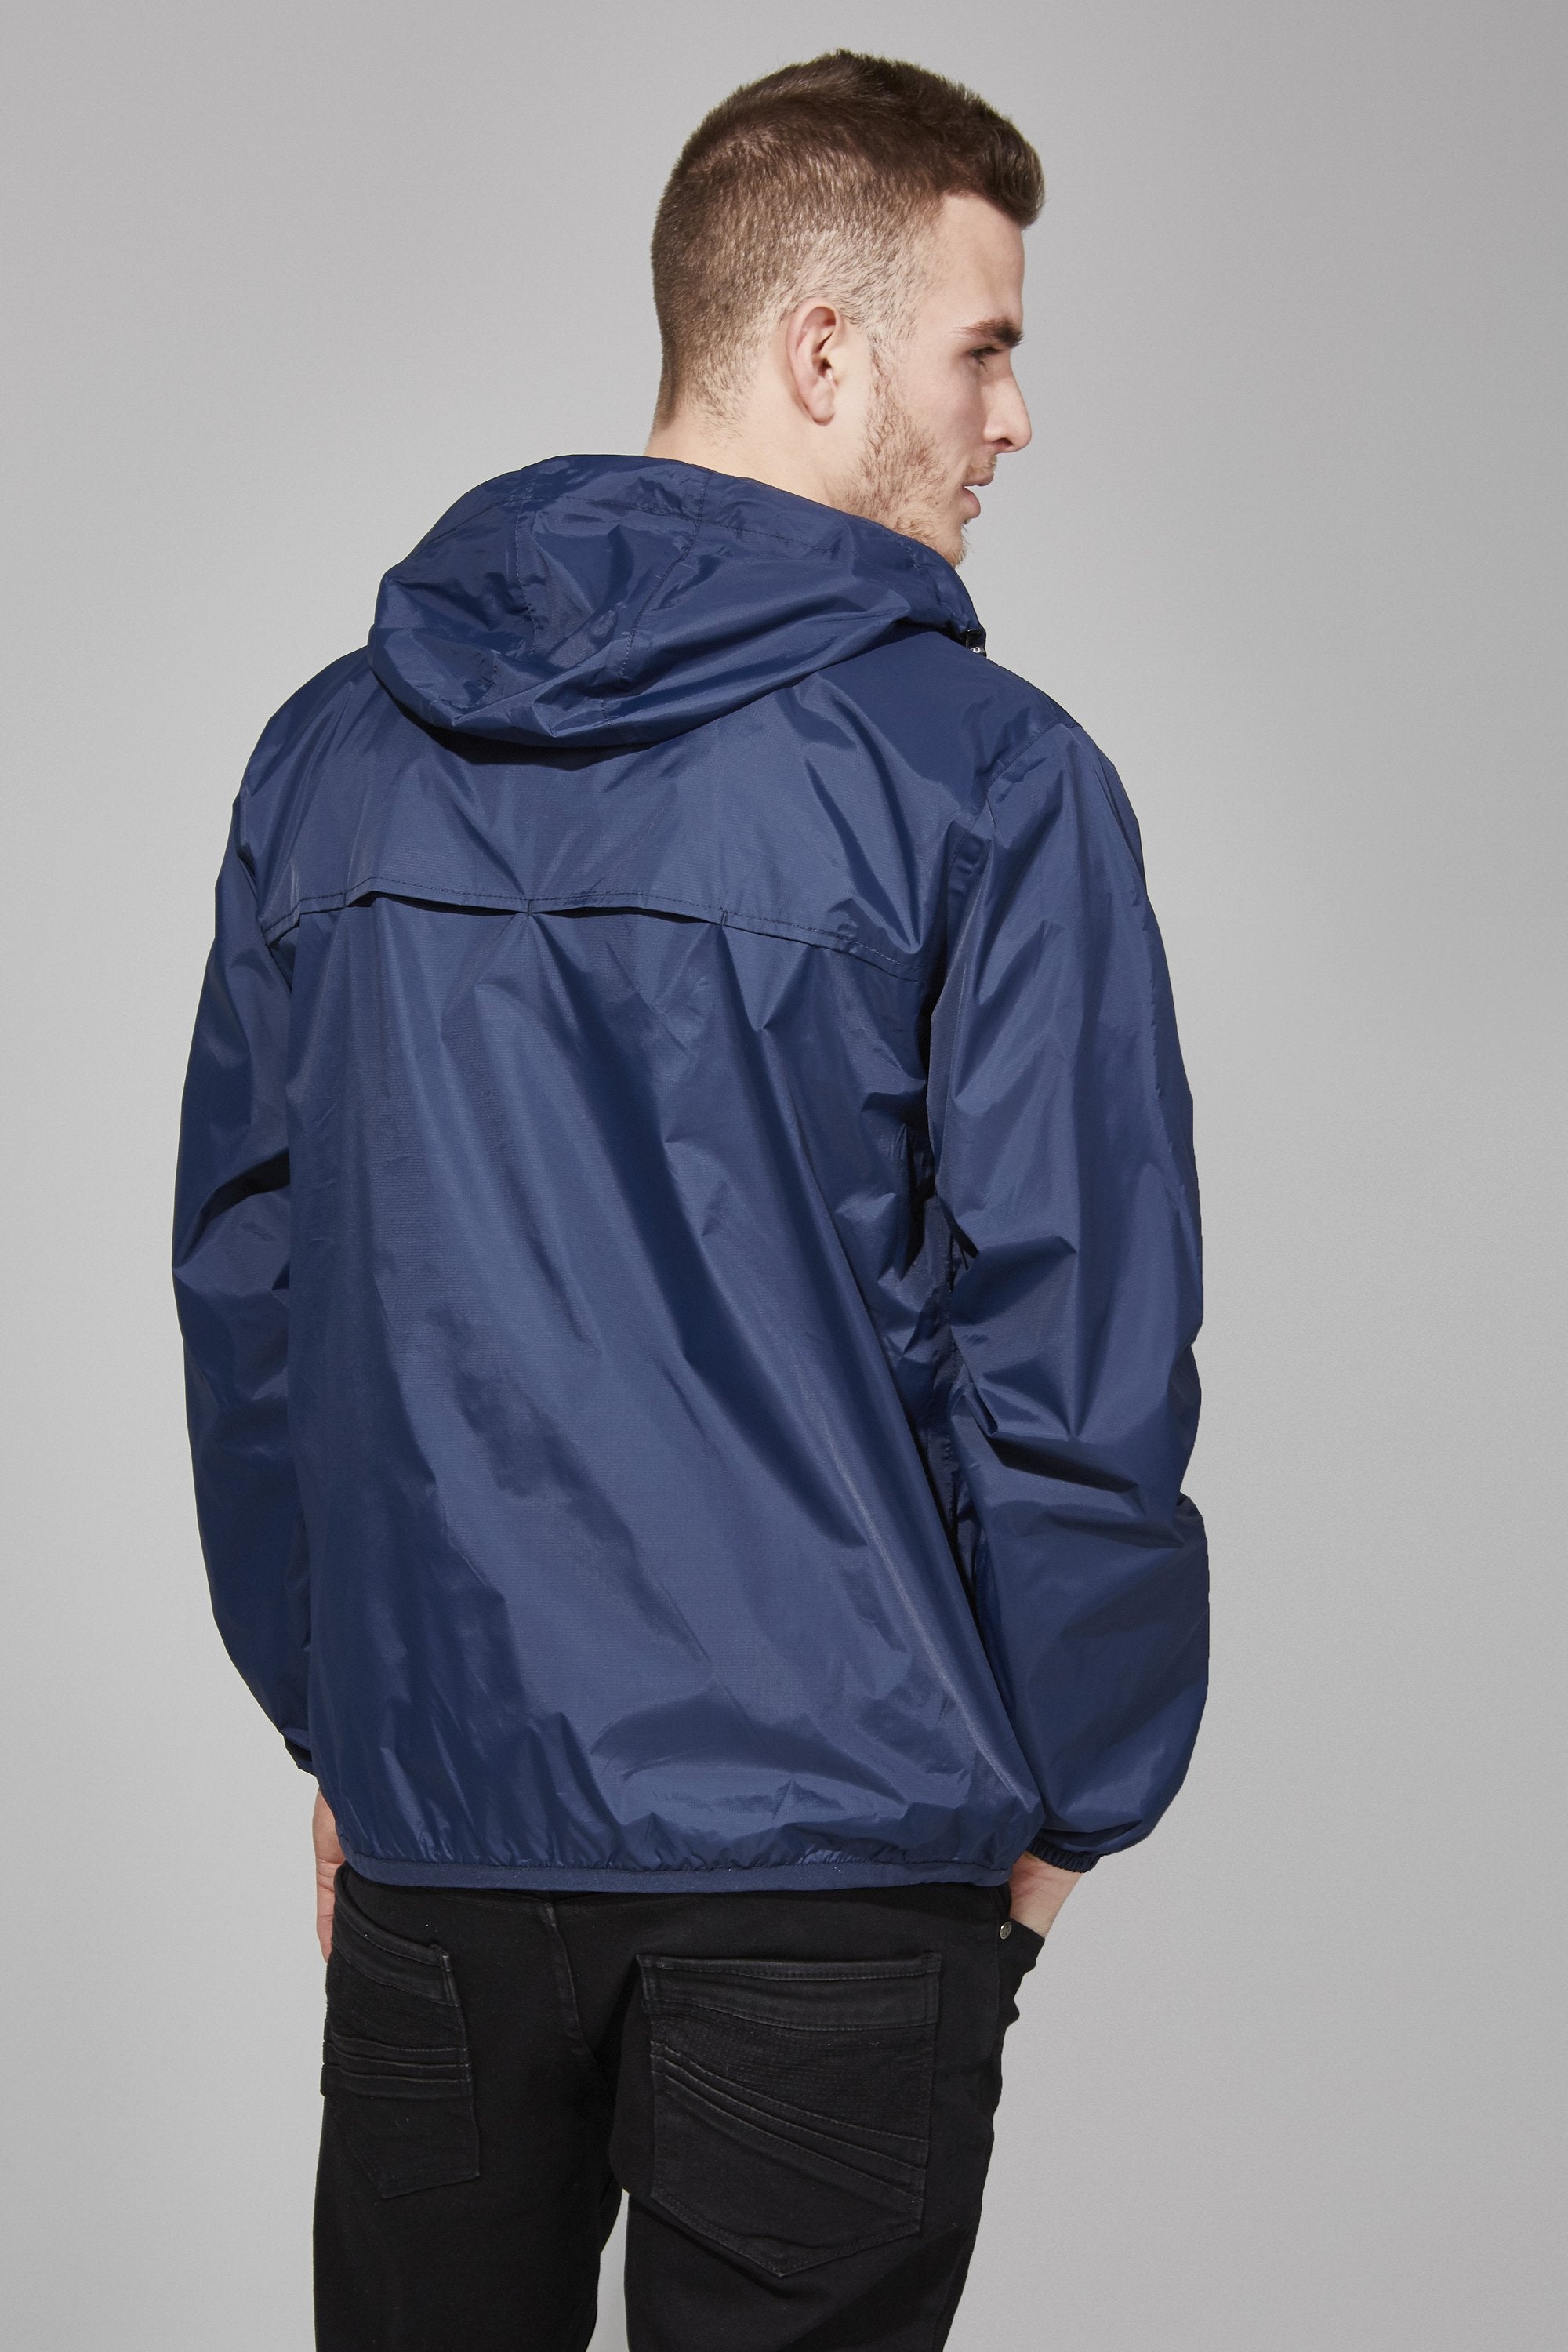 Picture of a Men's Full Zip Navy Blue Waterproof Rain Jacket back view